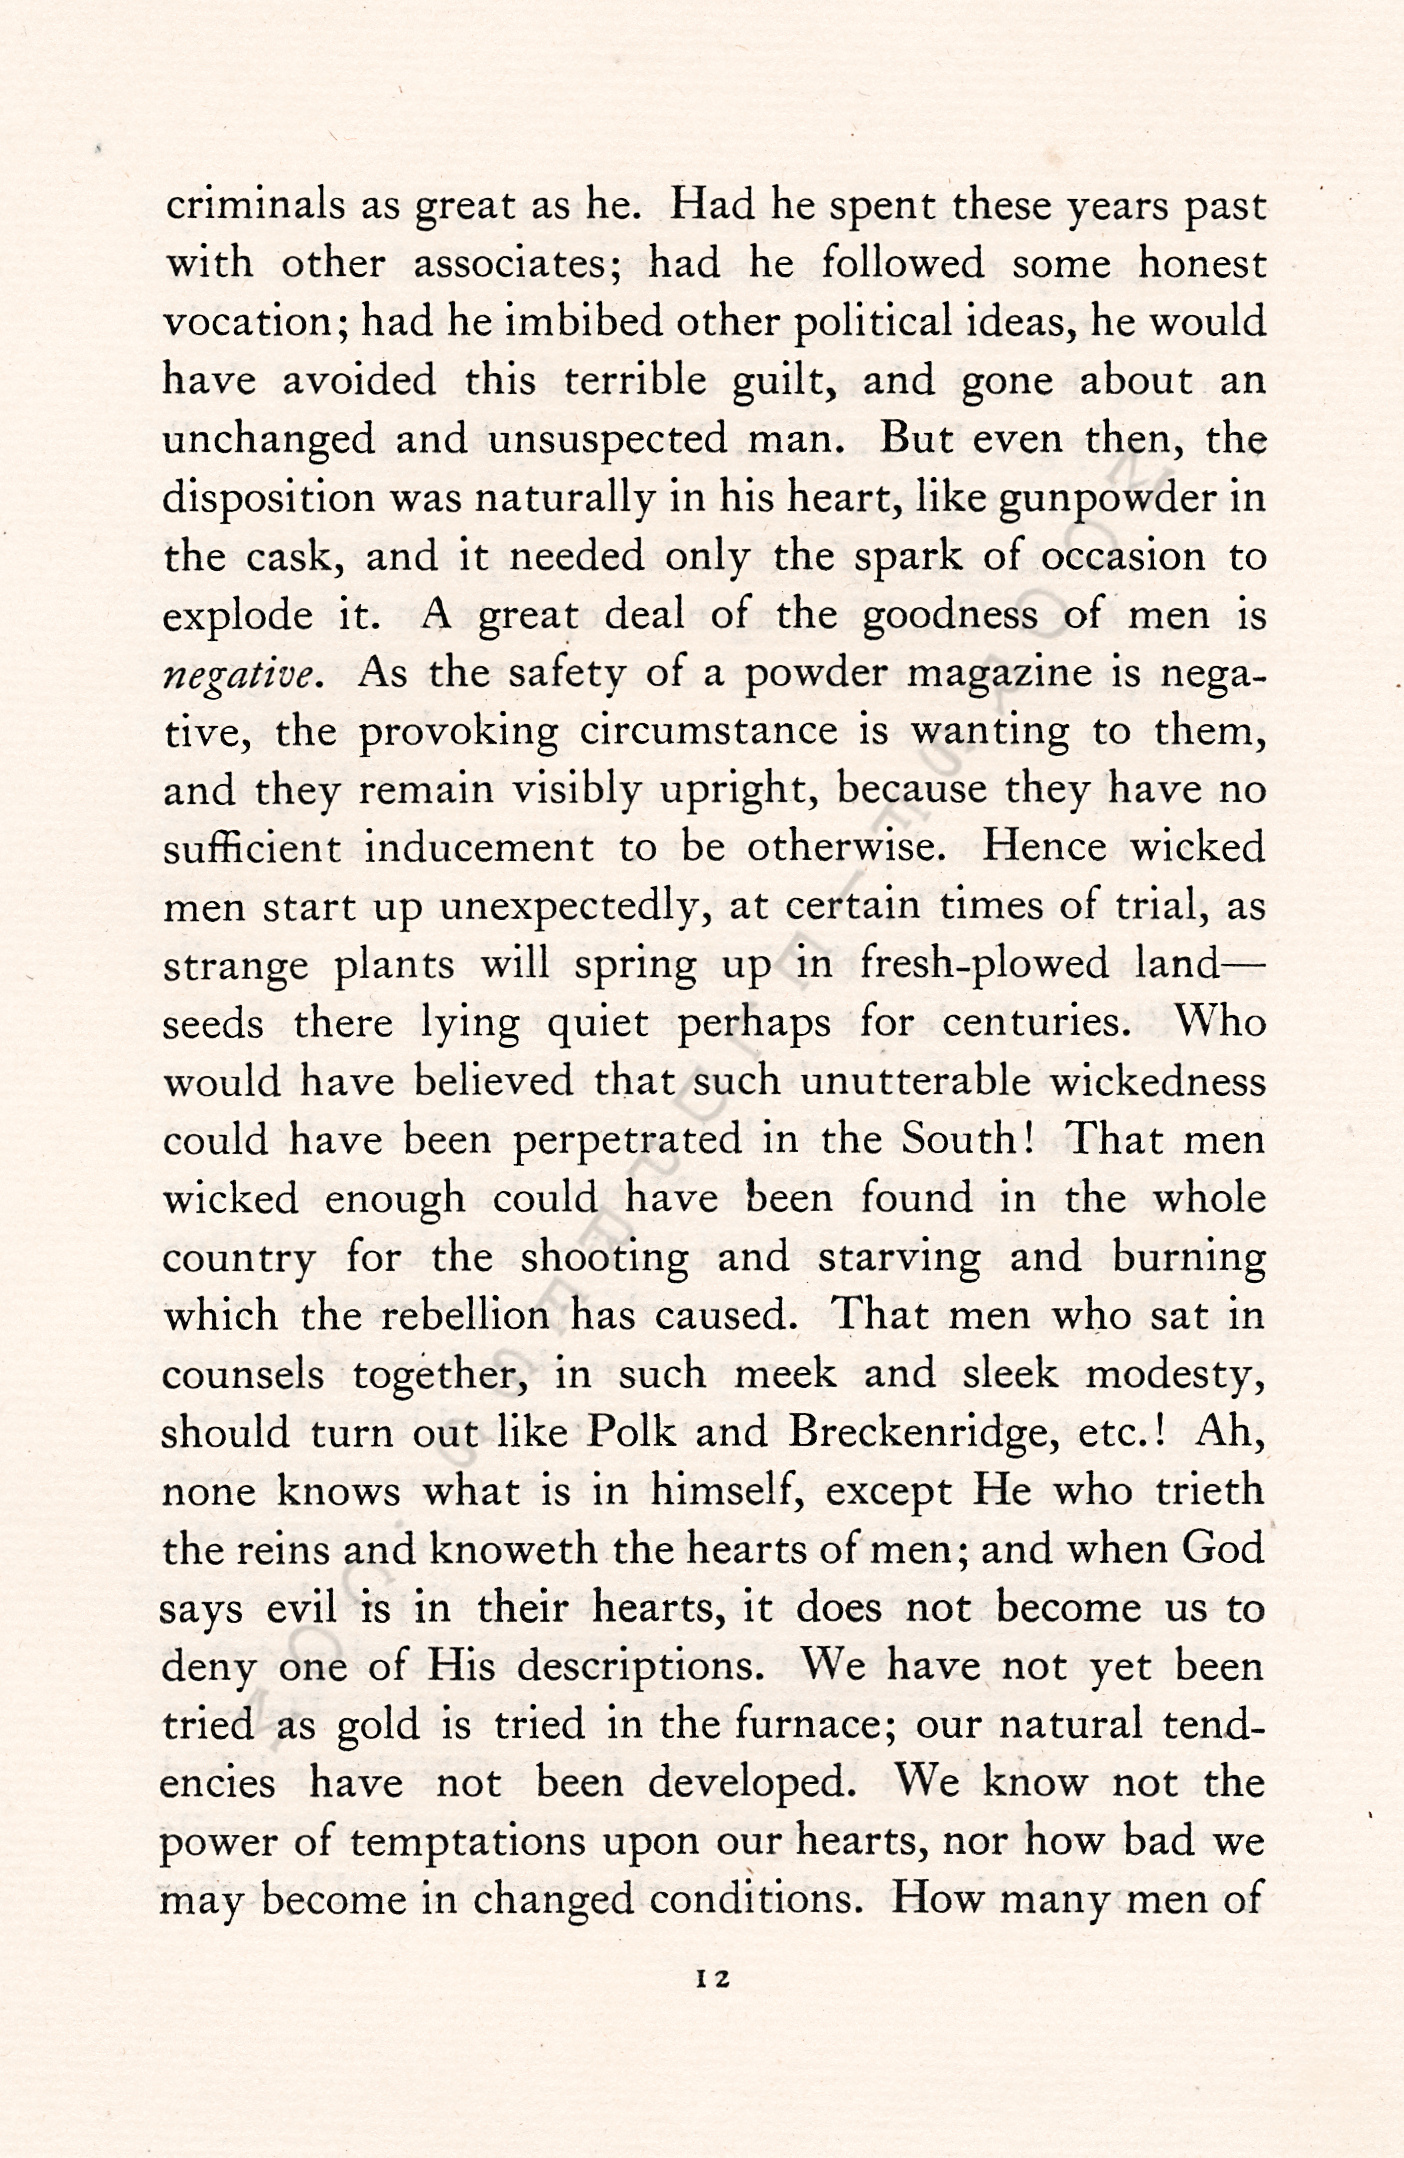 Human
                      Depravity - A Sermon on John Wilkes Booth by
                      Mortimer Blake 1865